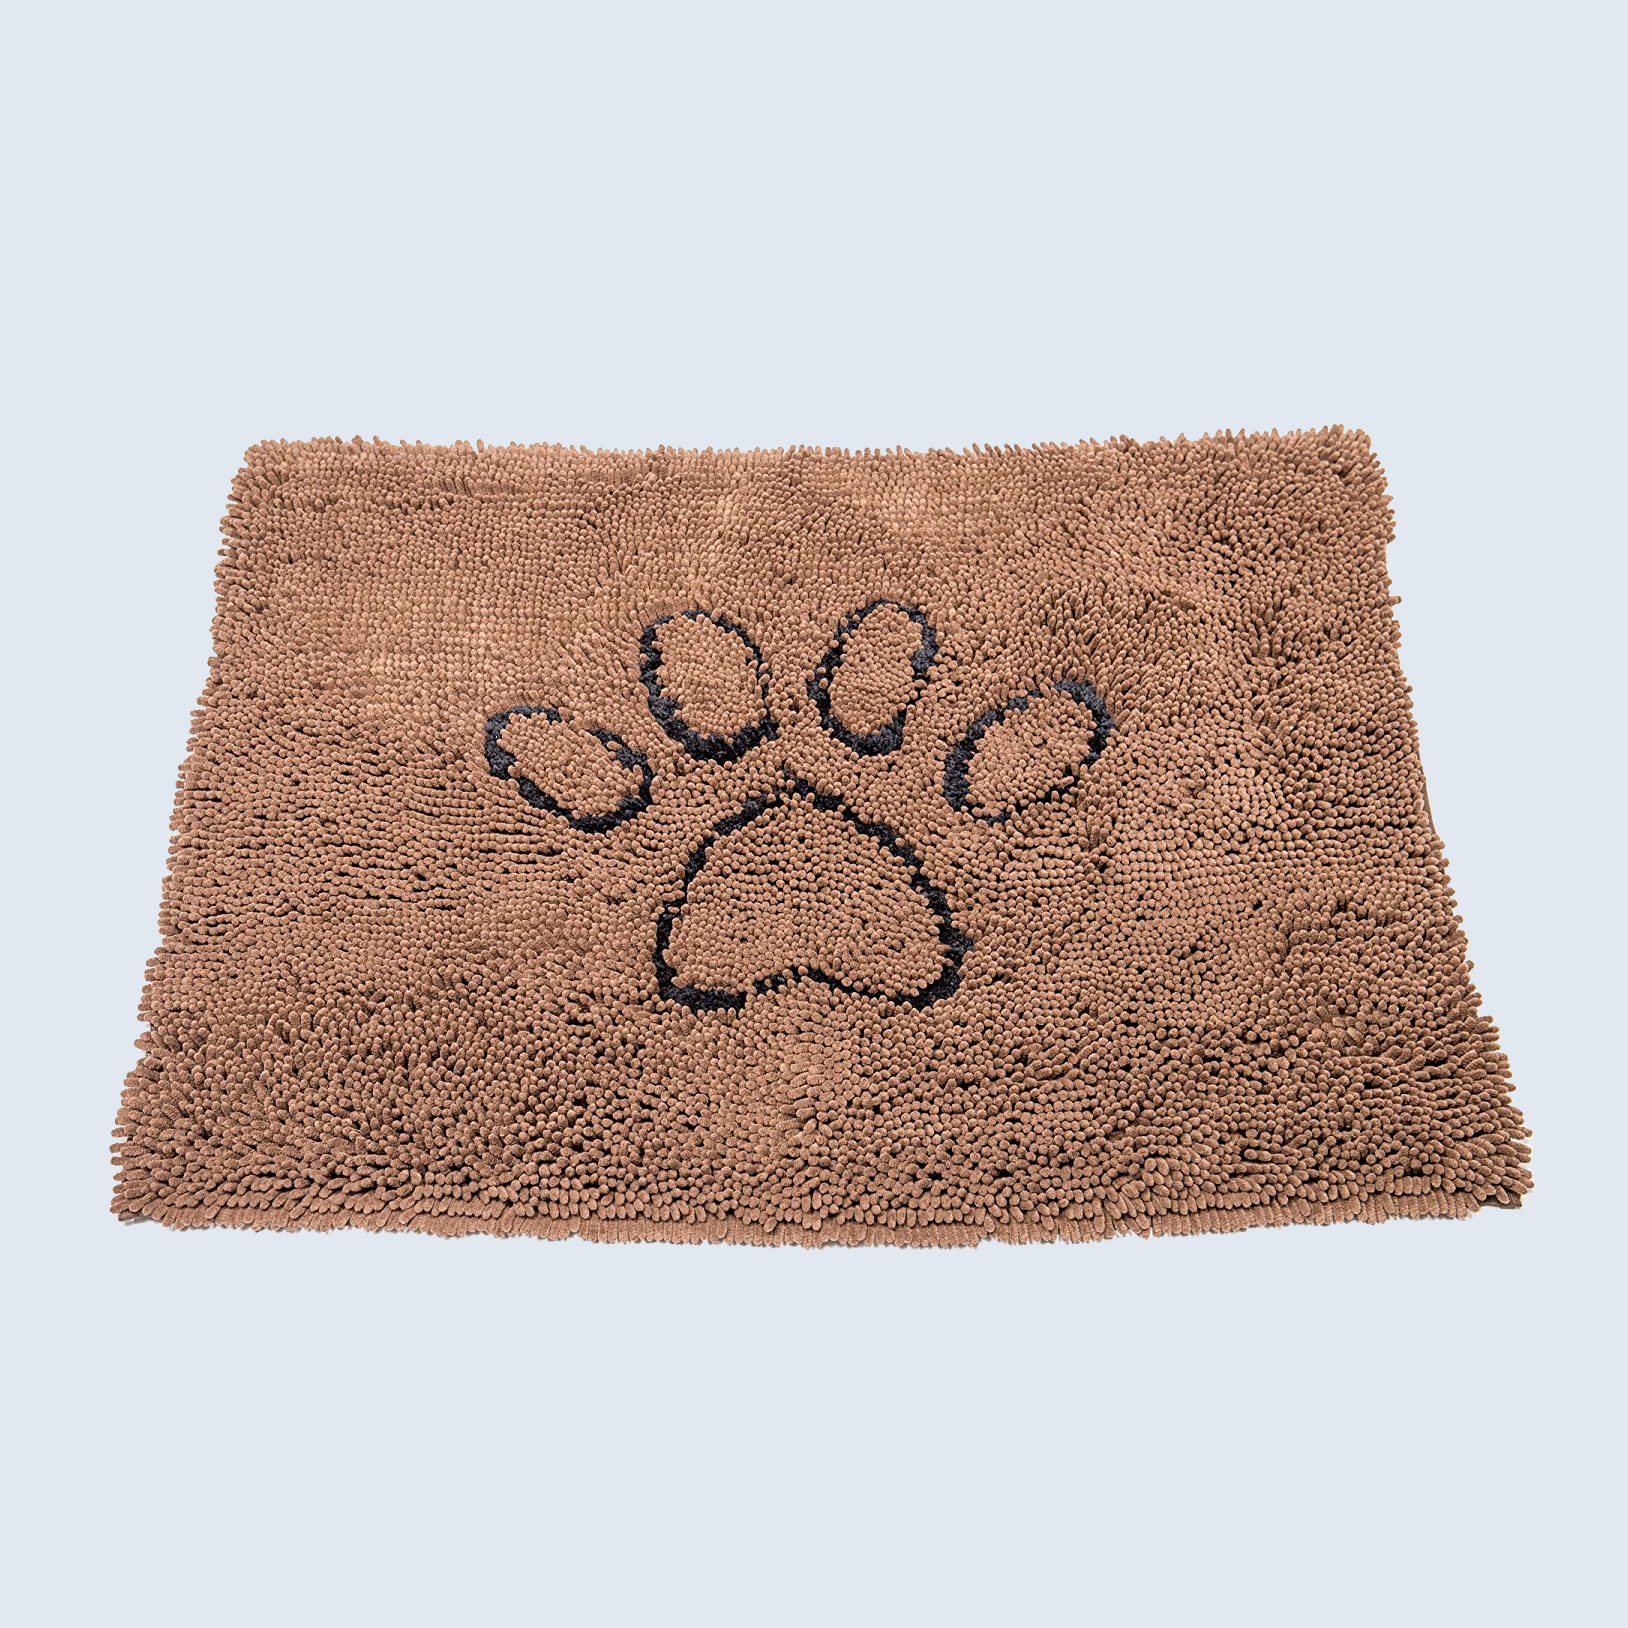 Dirty dog doormat